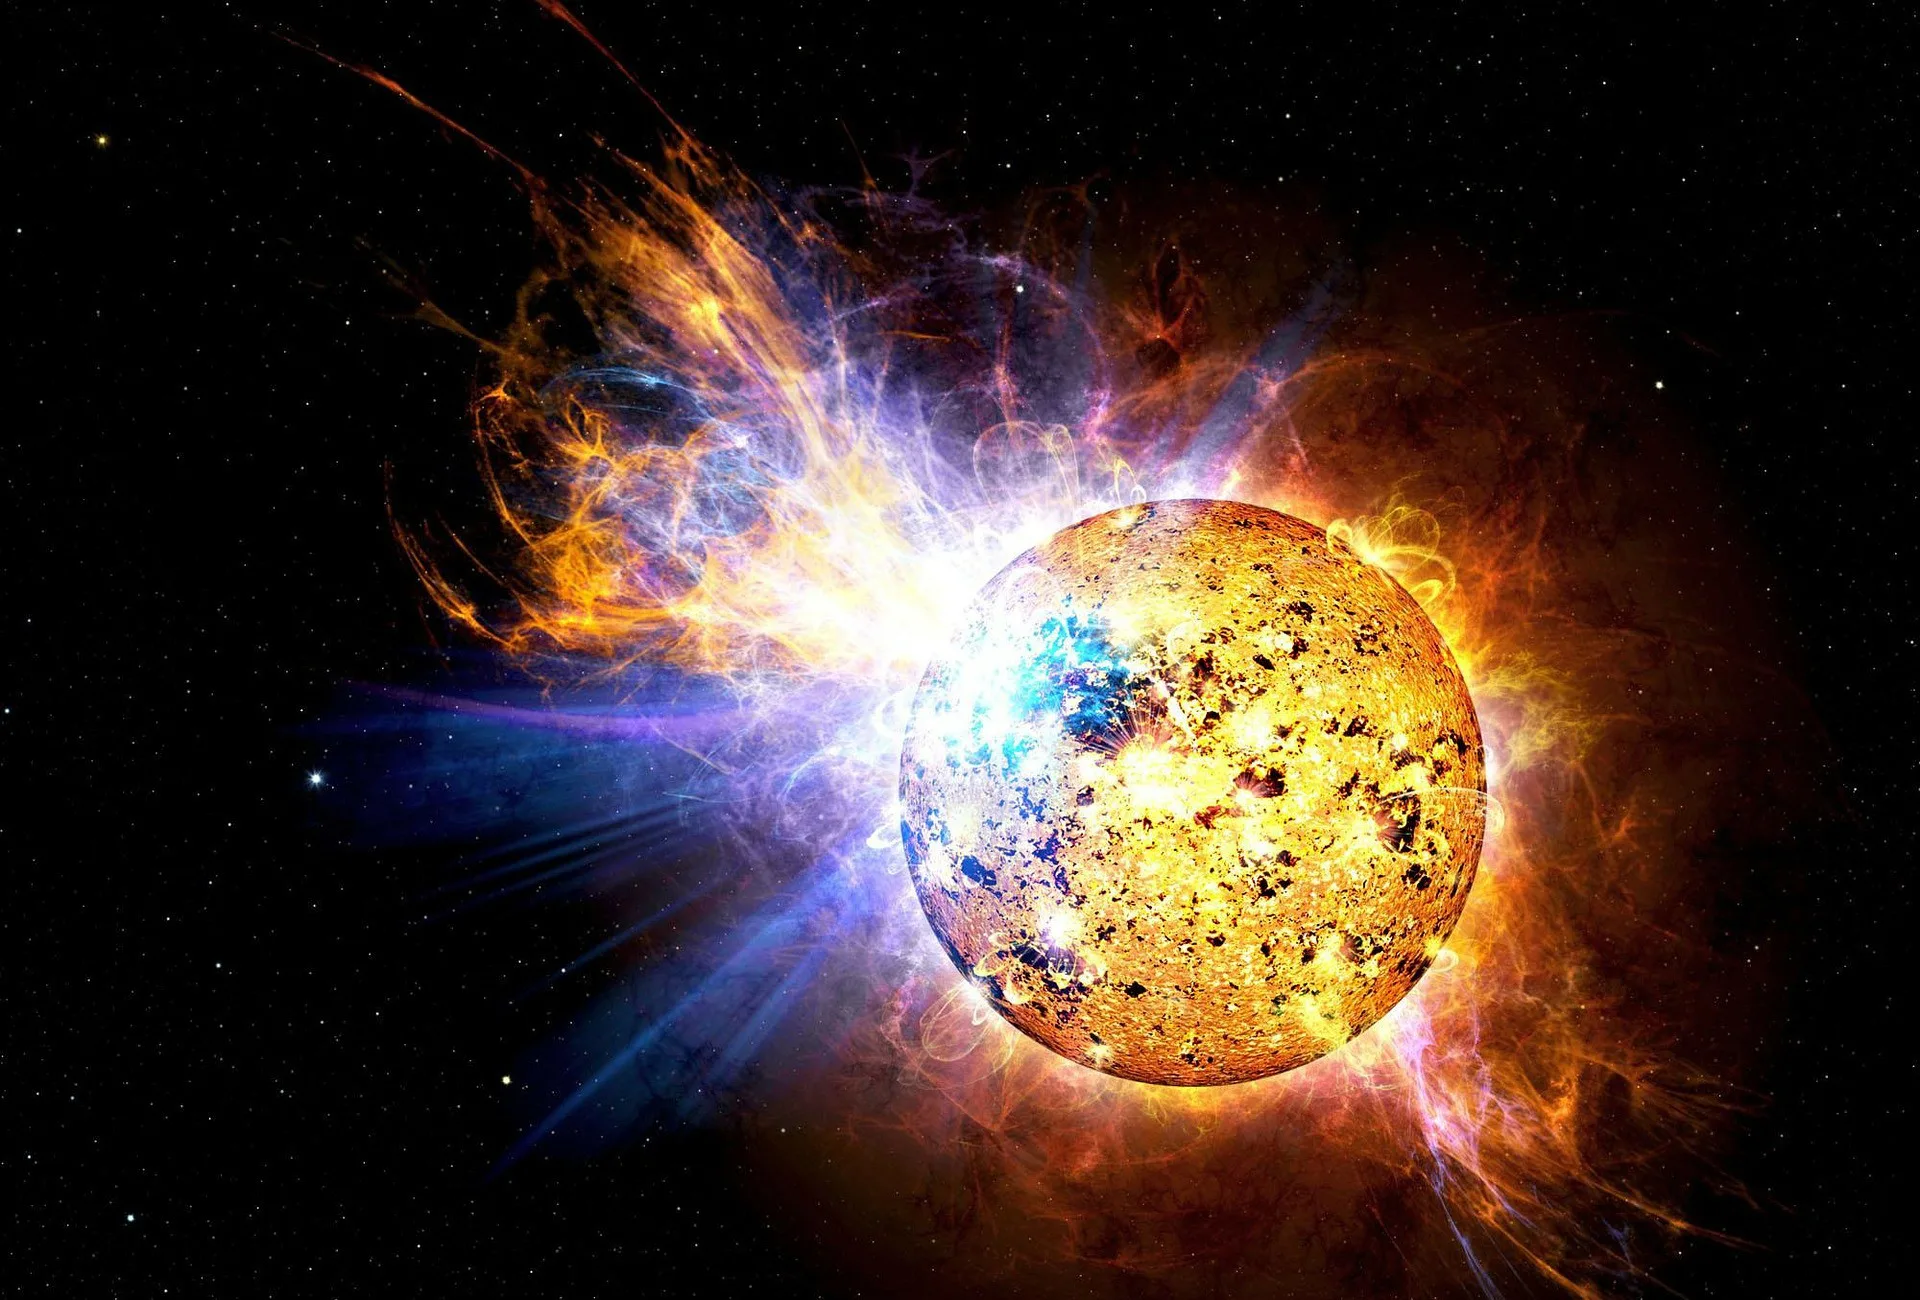 slnko krystal obrovsky tazky velmi vesmir krystalizacia miliardy rokov jpg